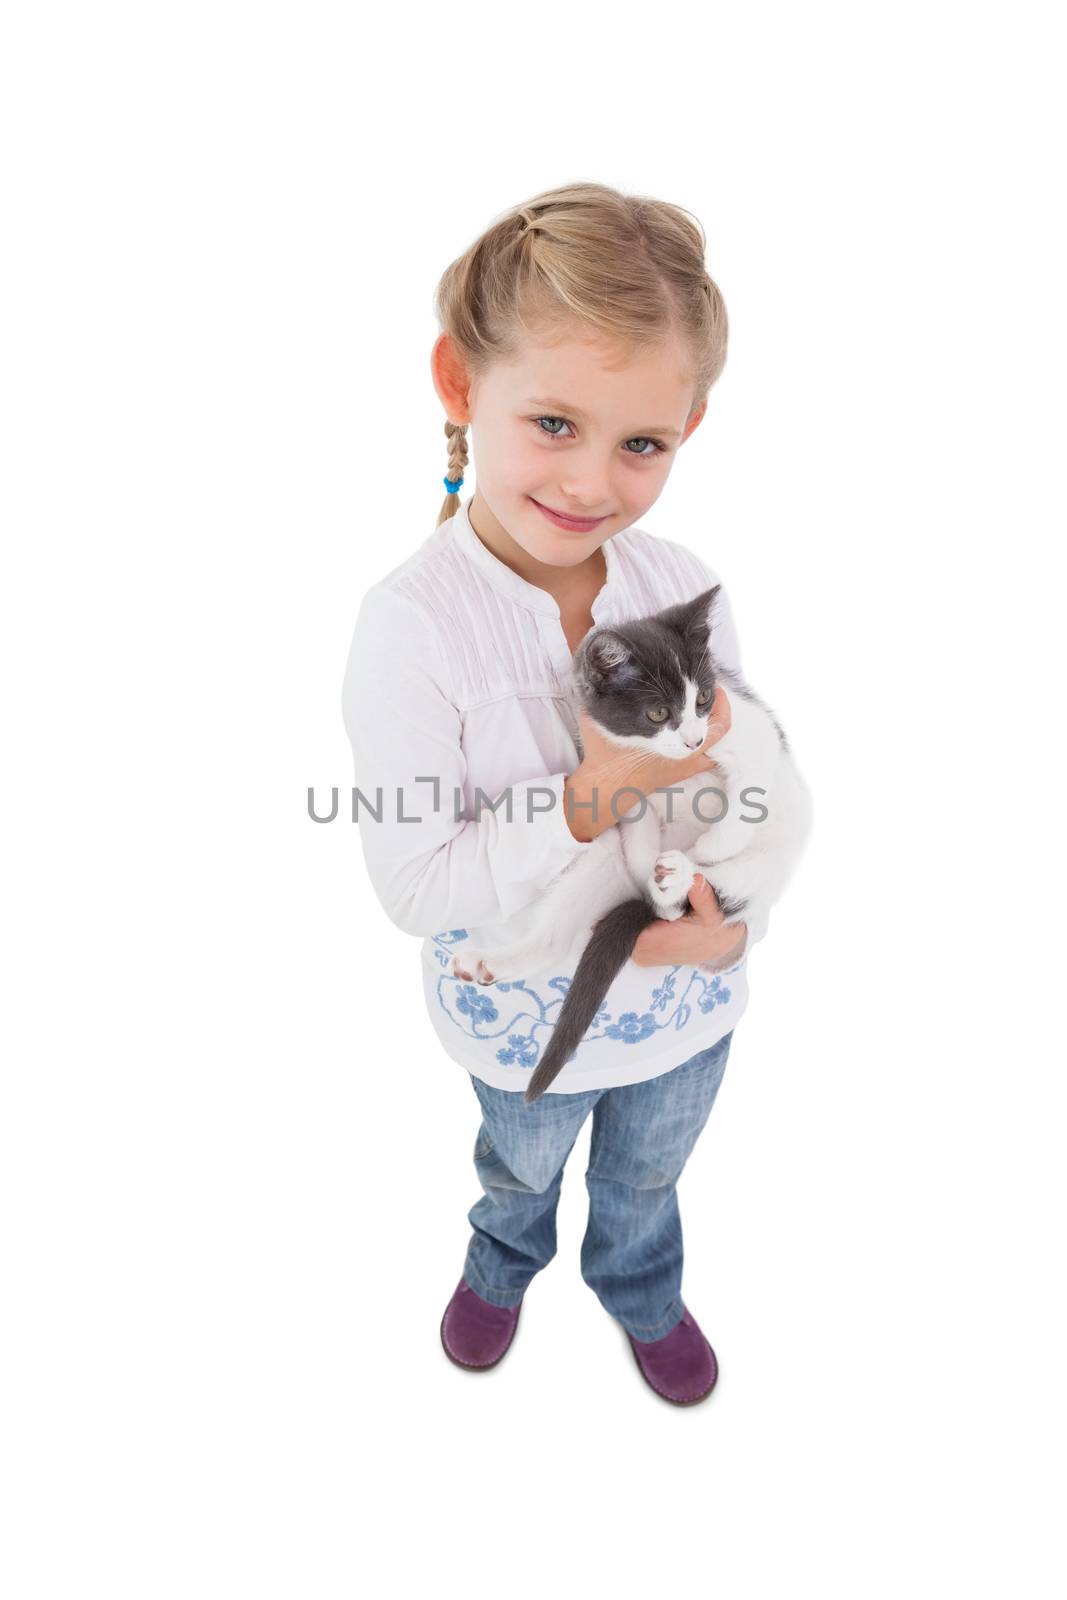 Smiling little girl with her cute kitten  by Wavebreakmedia